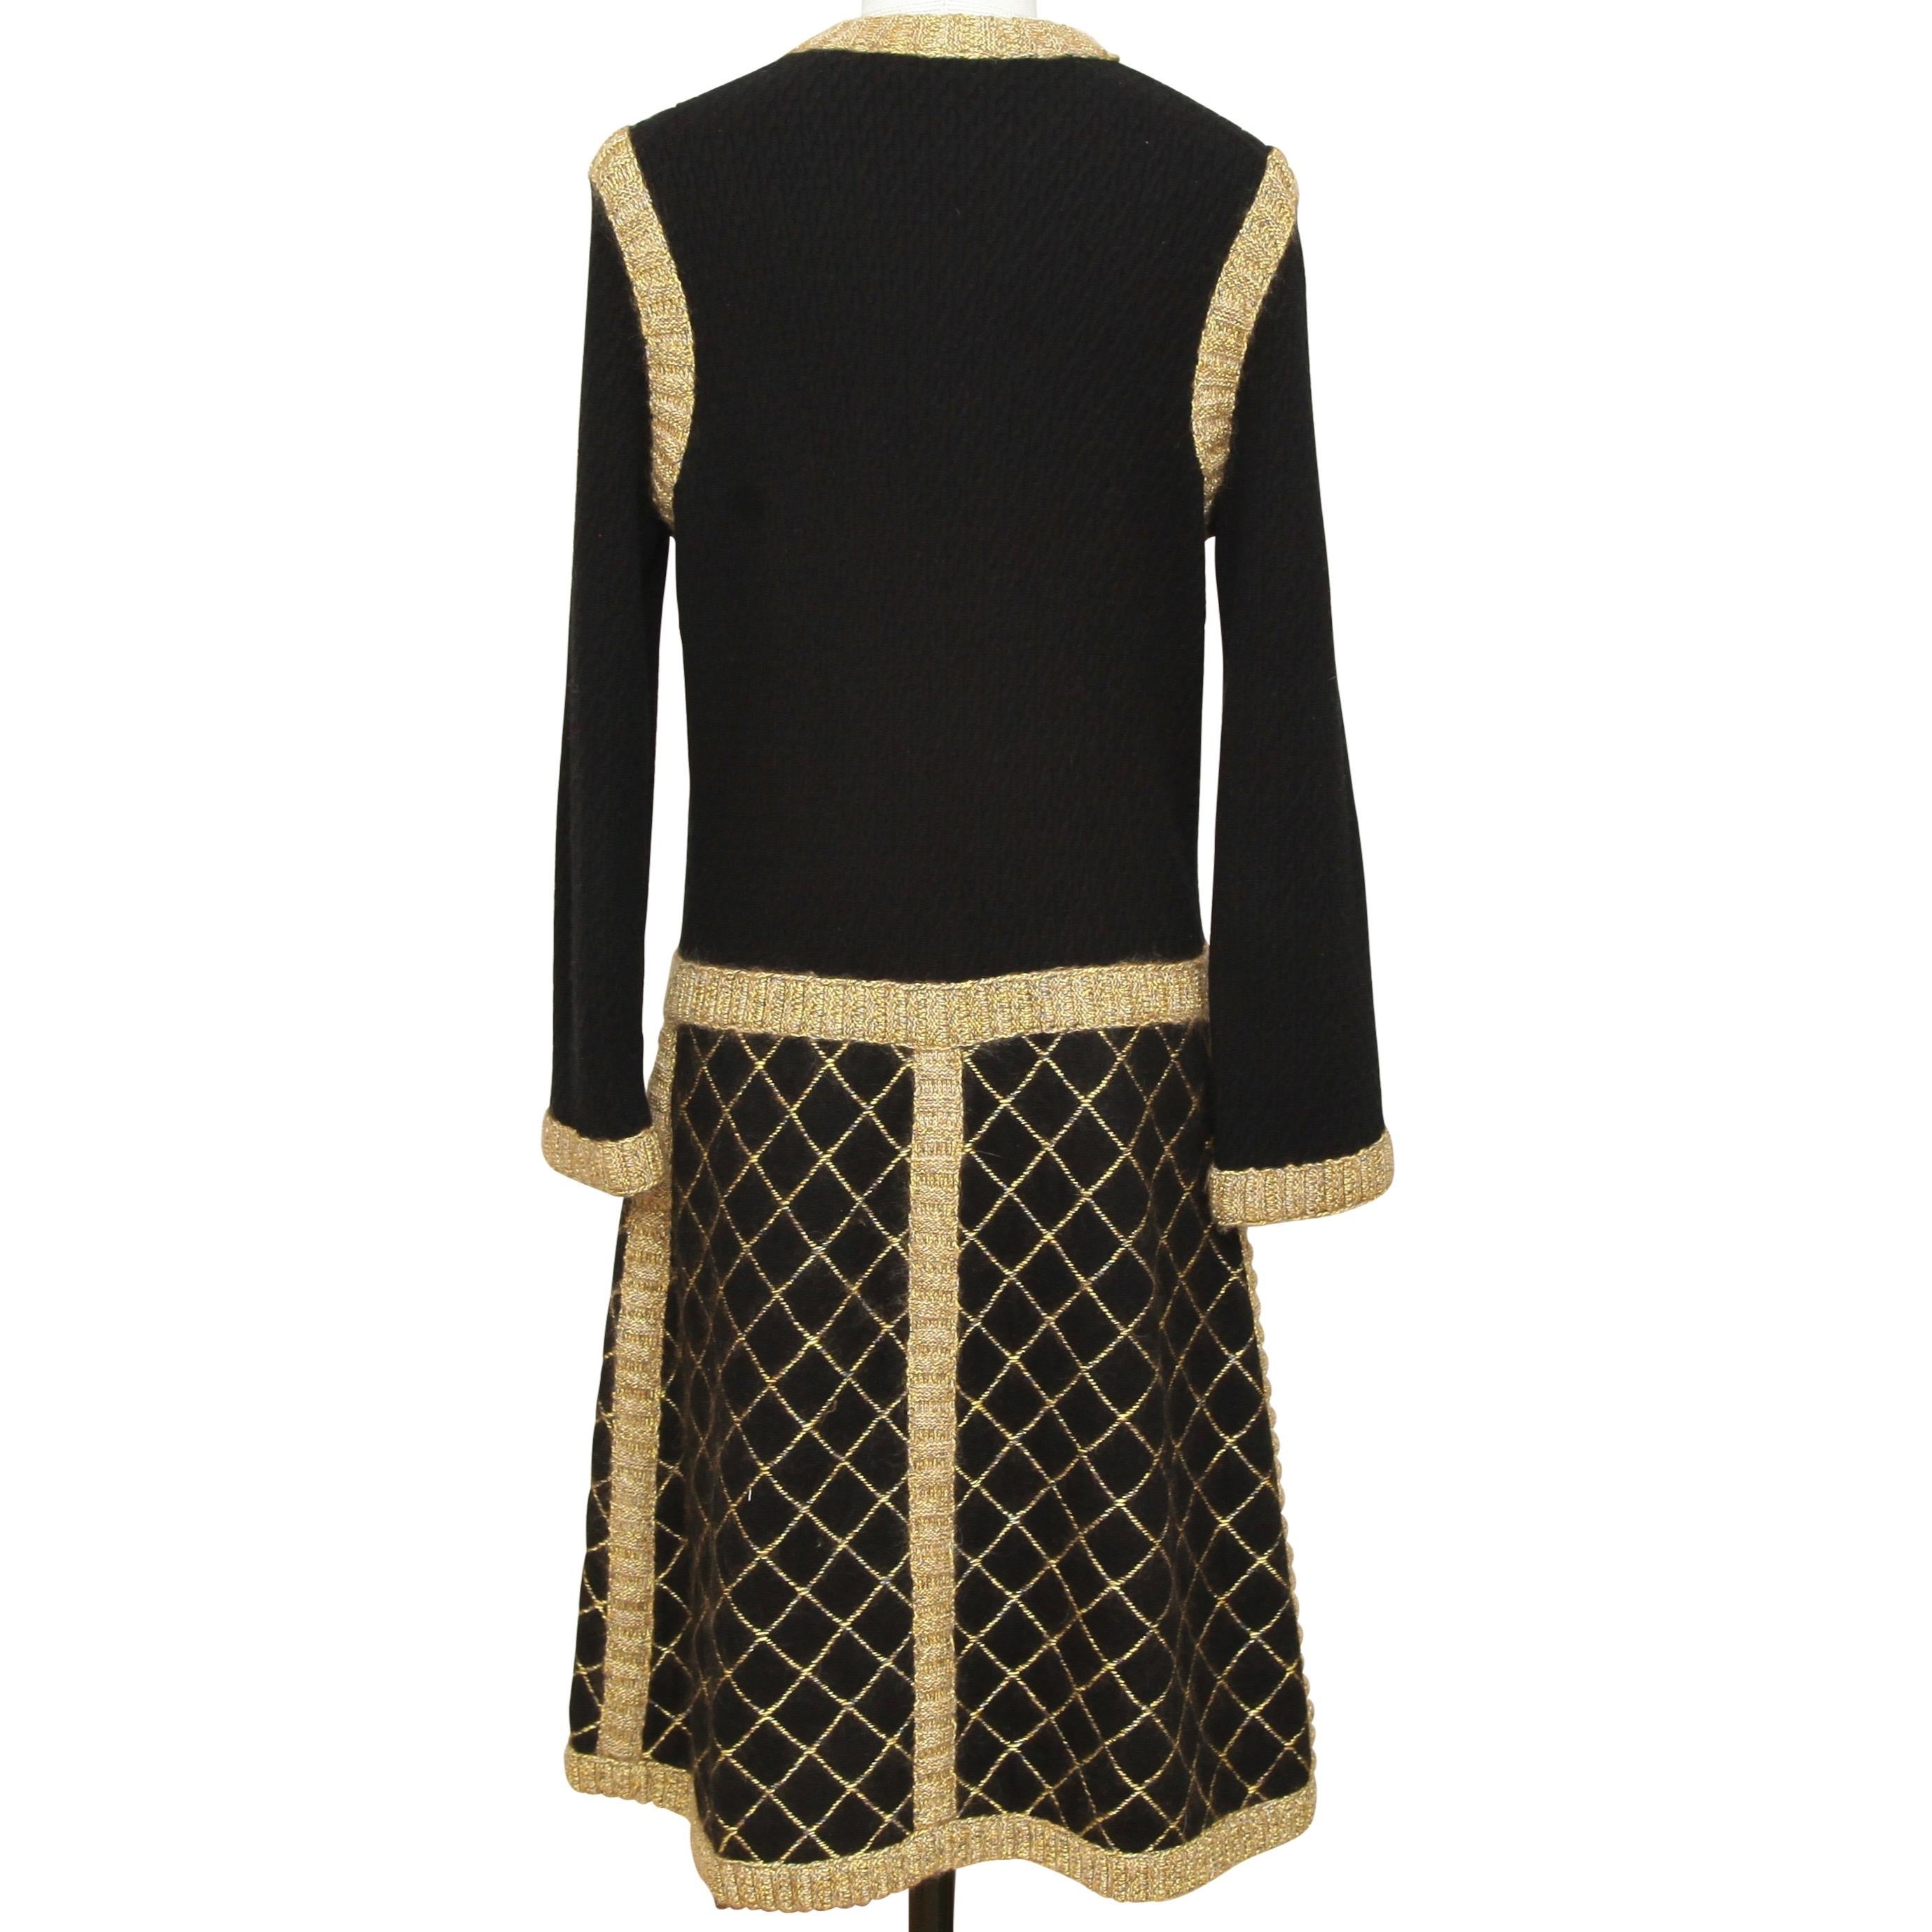 CHANEL Dress Knit Sweater Black Gold Camellia Long Sleeve Cashmere Sz 42 2015 2